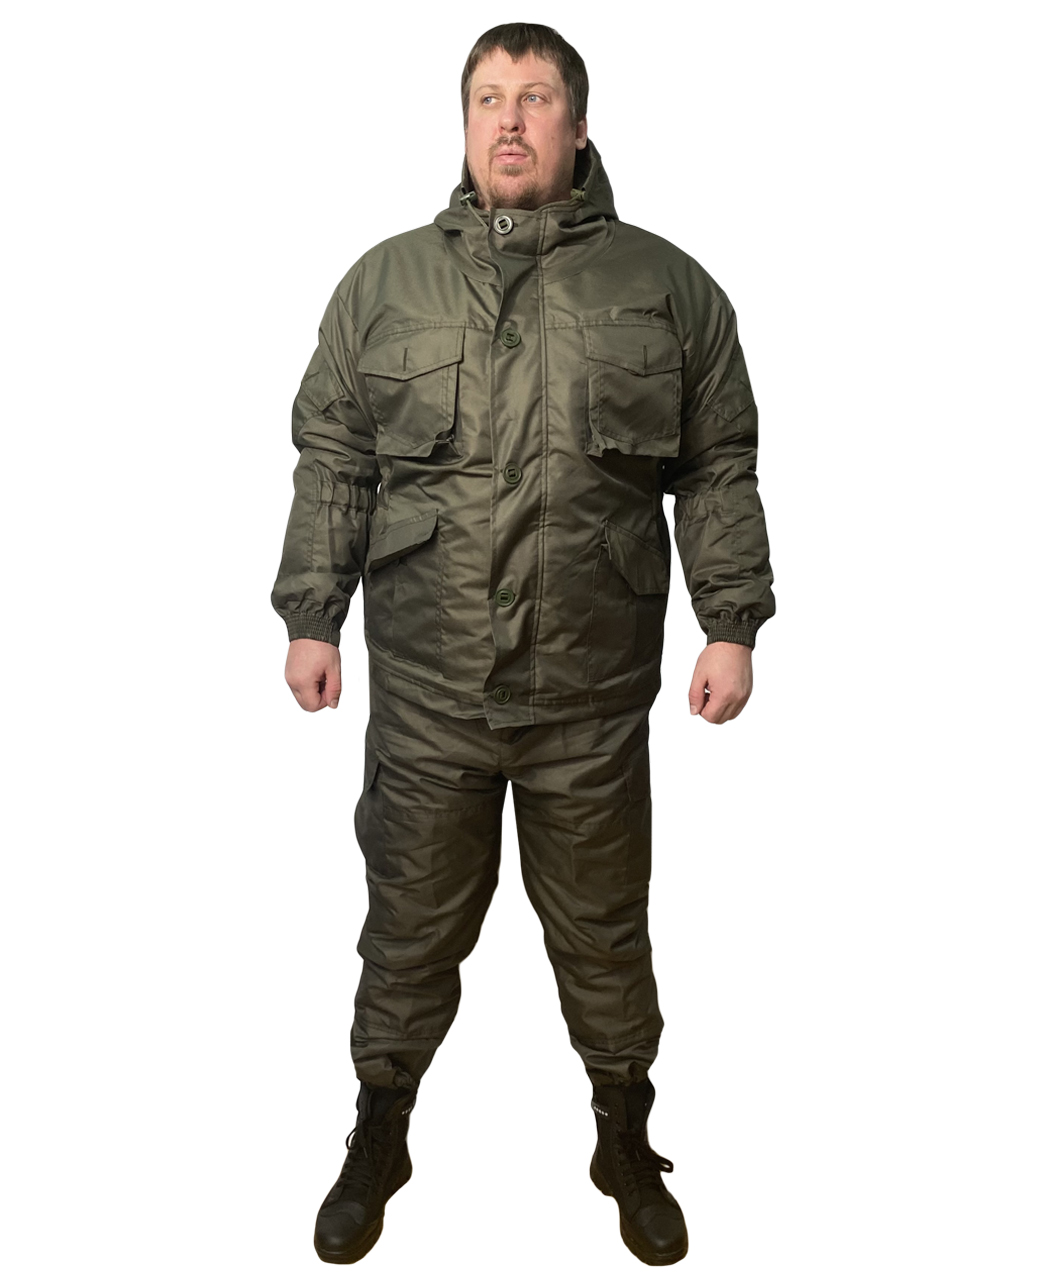 Демисезонный костюм Горка-8 премиум рип-стоп (олива) 